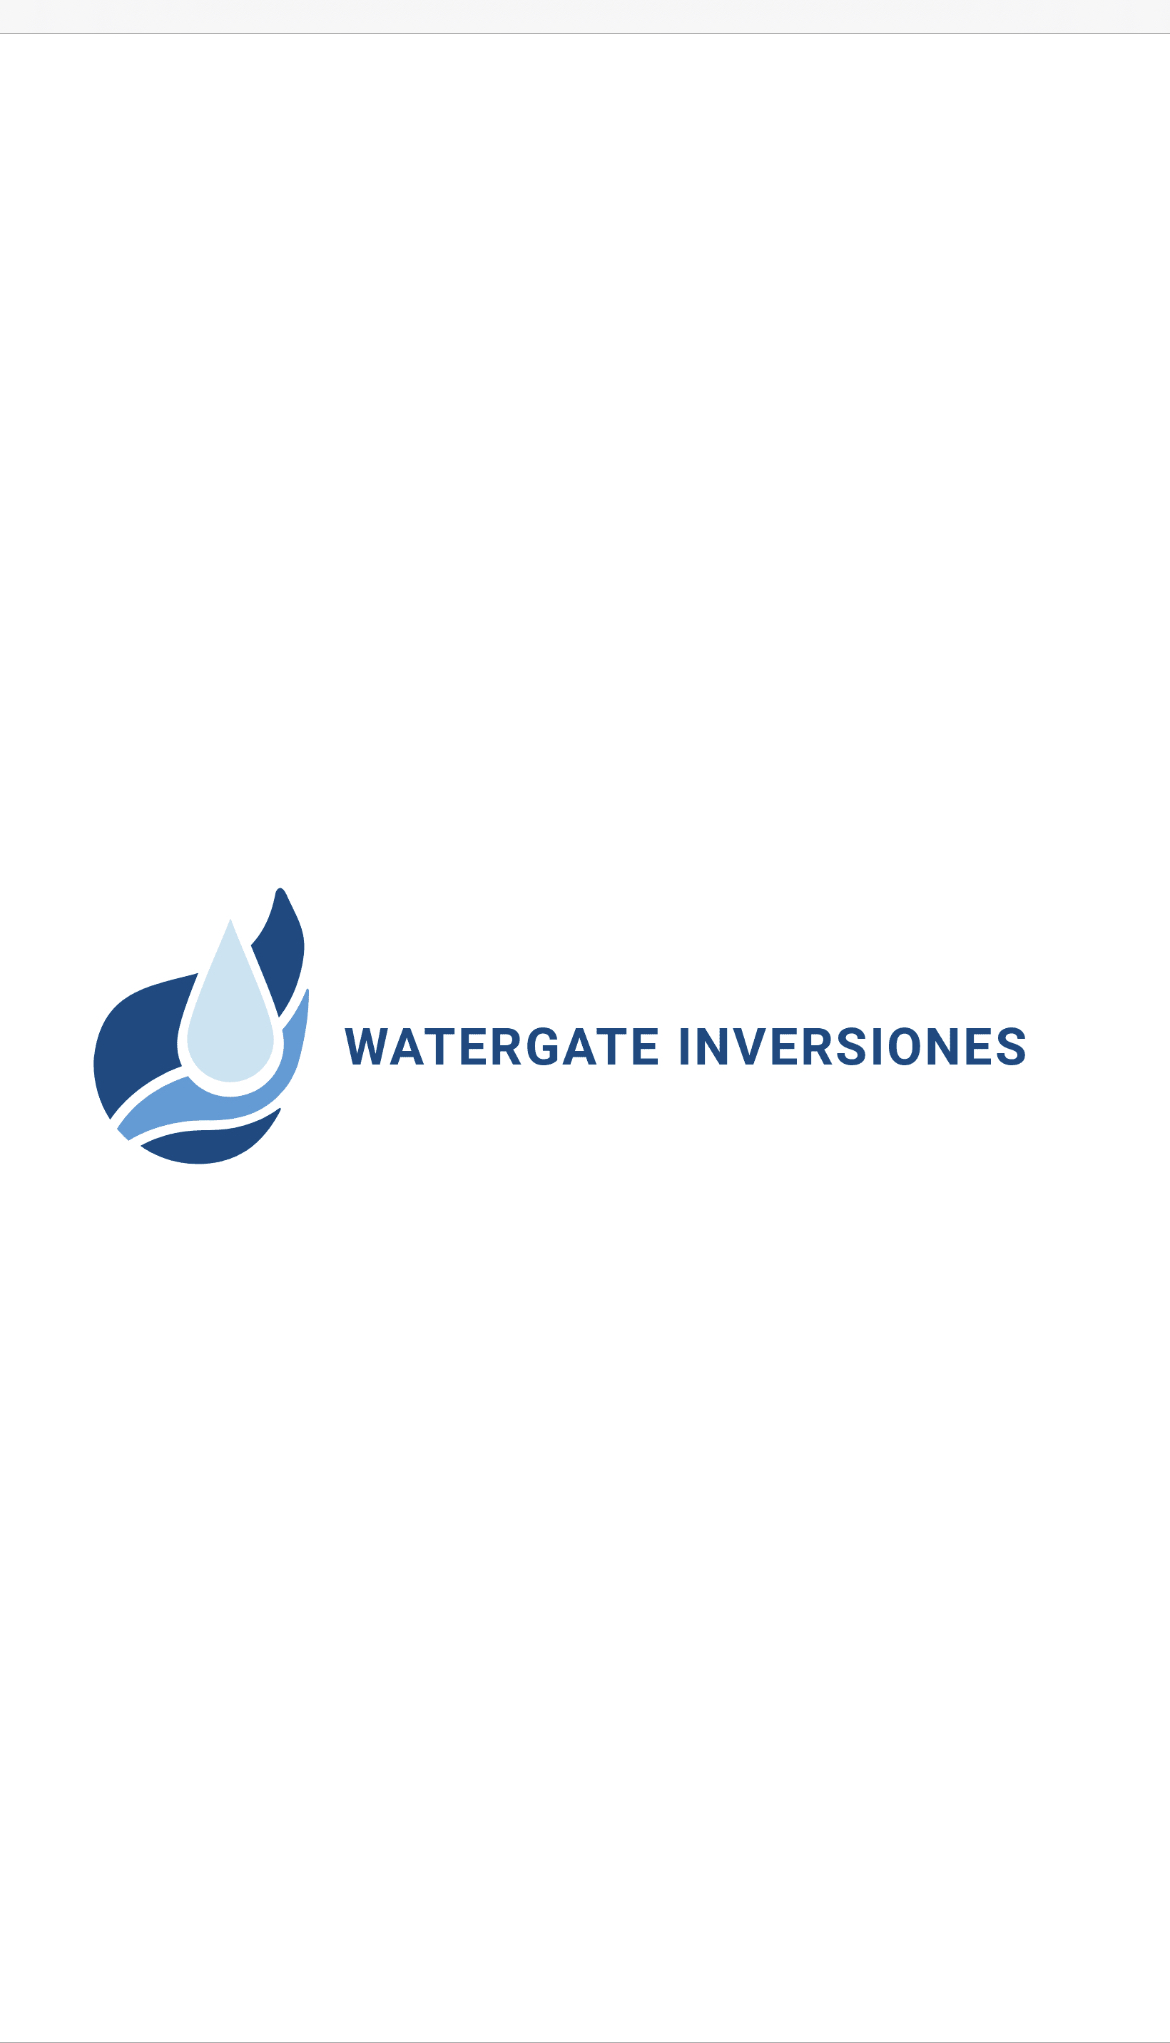 WATERGATE INVERSIONES